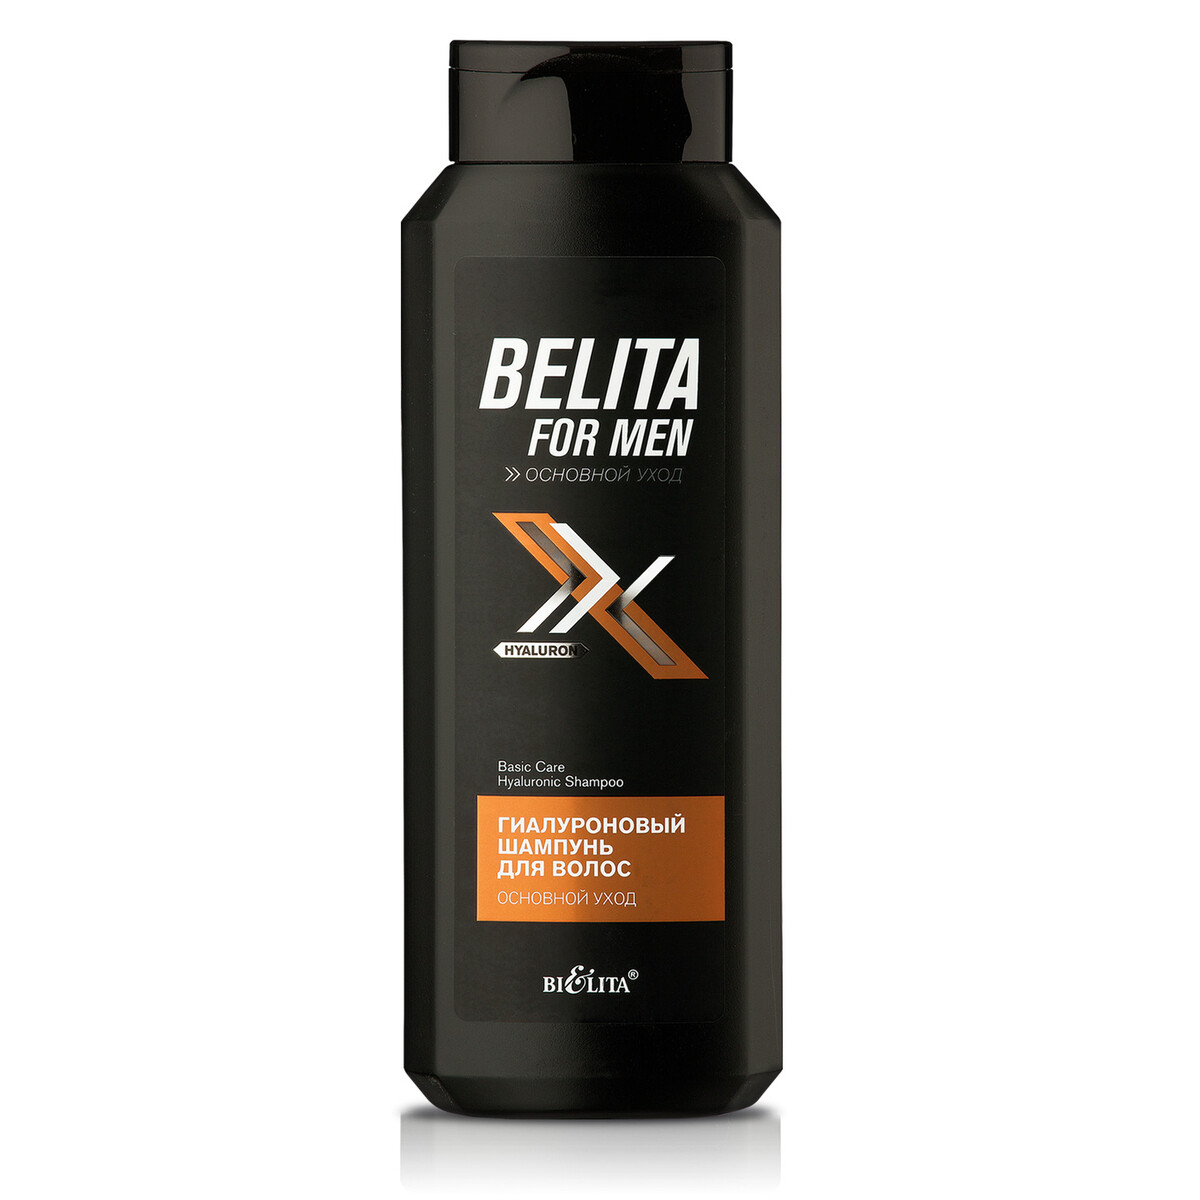    belita for men